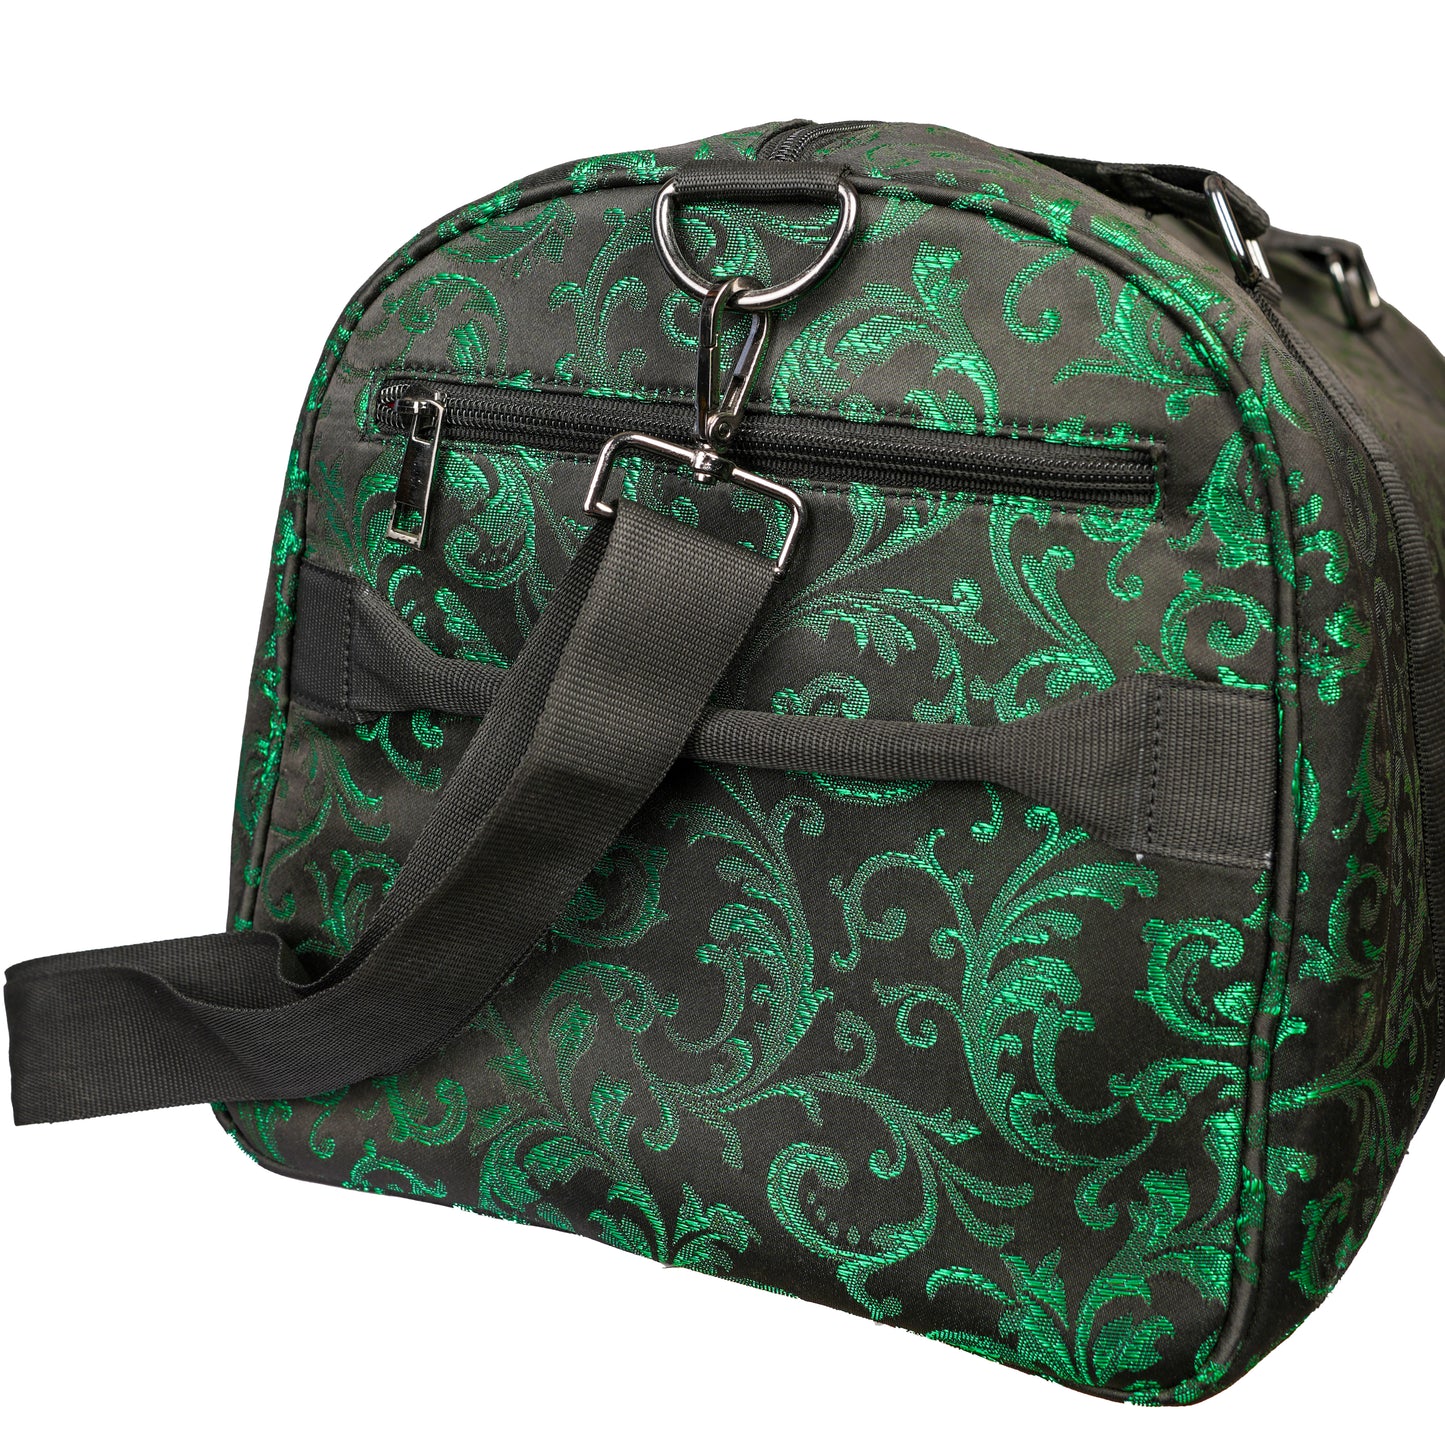 Emerald  Green and Black Brocade Duffel Bag